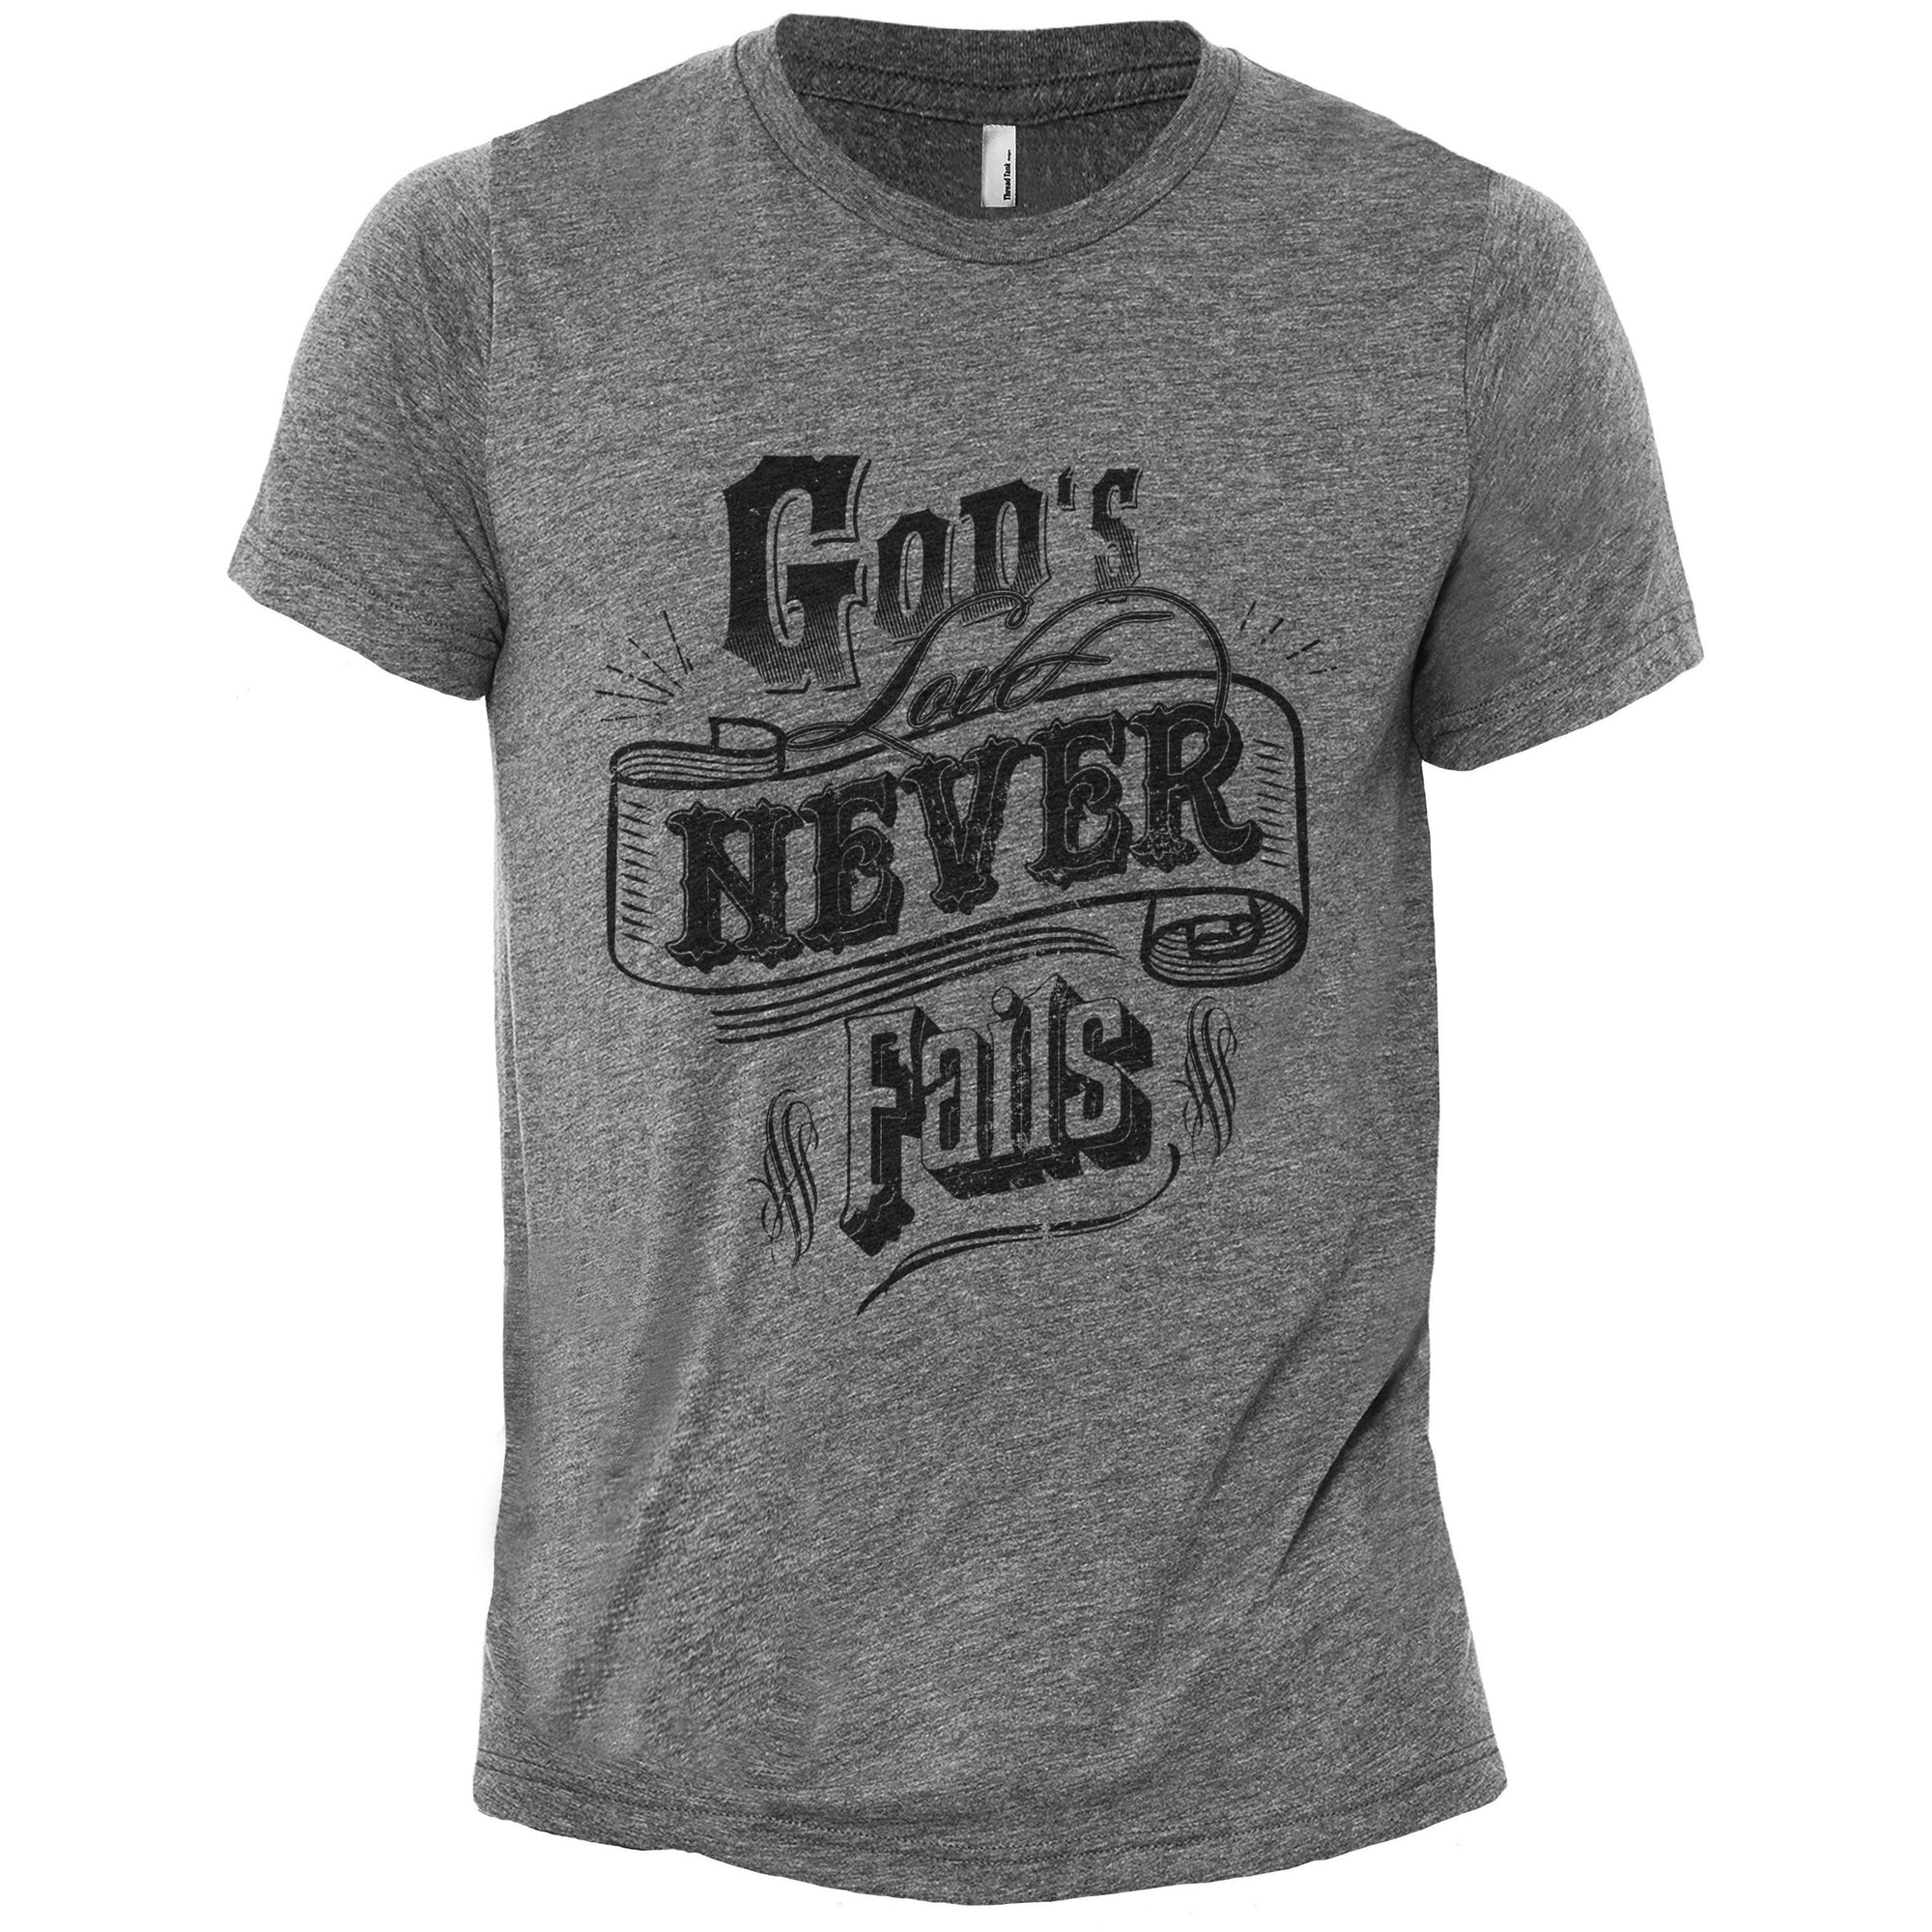 Gods Love Never Fails Heather Grey Printed Graphic Men's Crew T-Shirt Tee